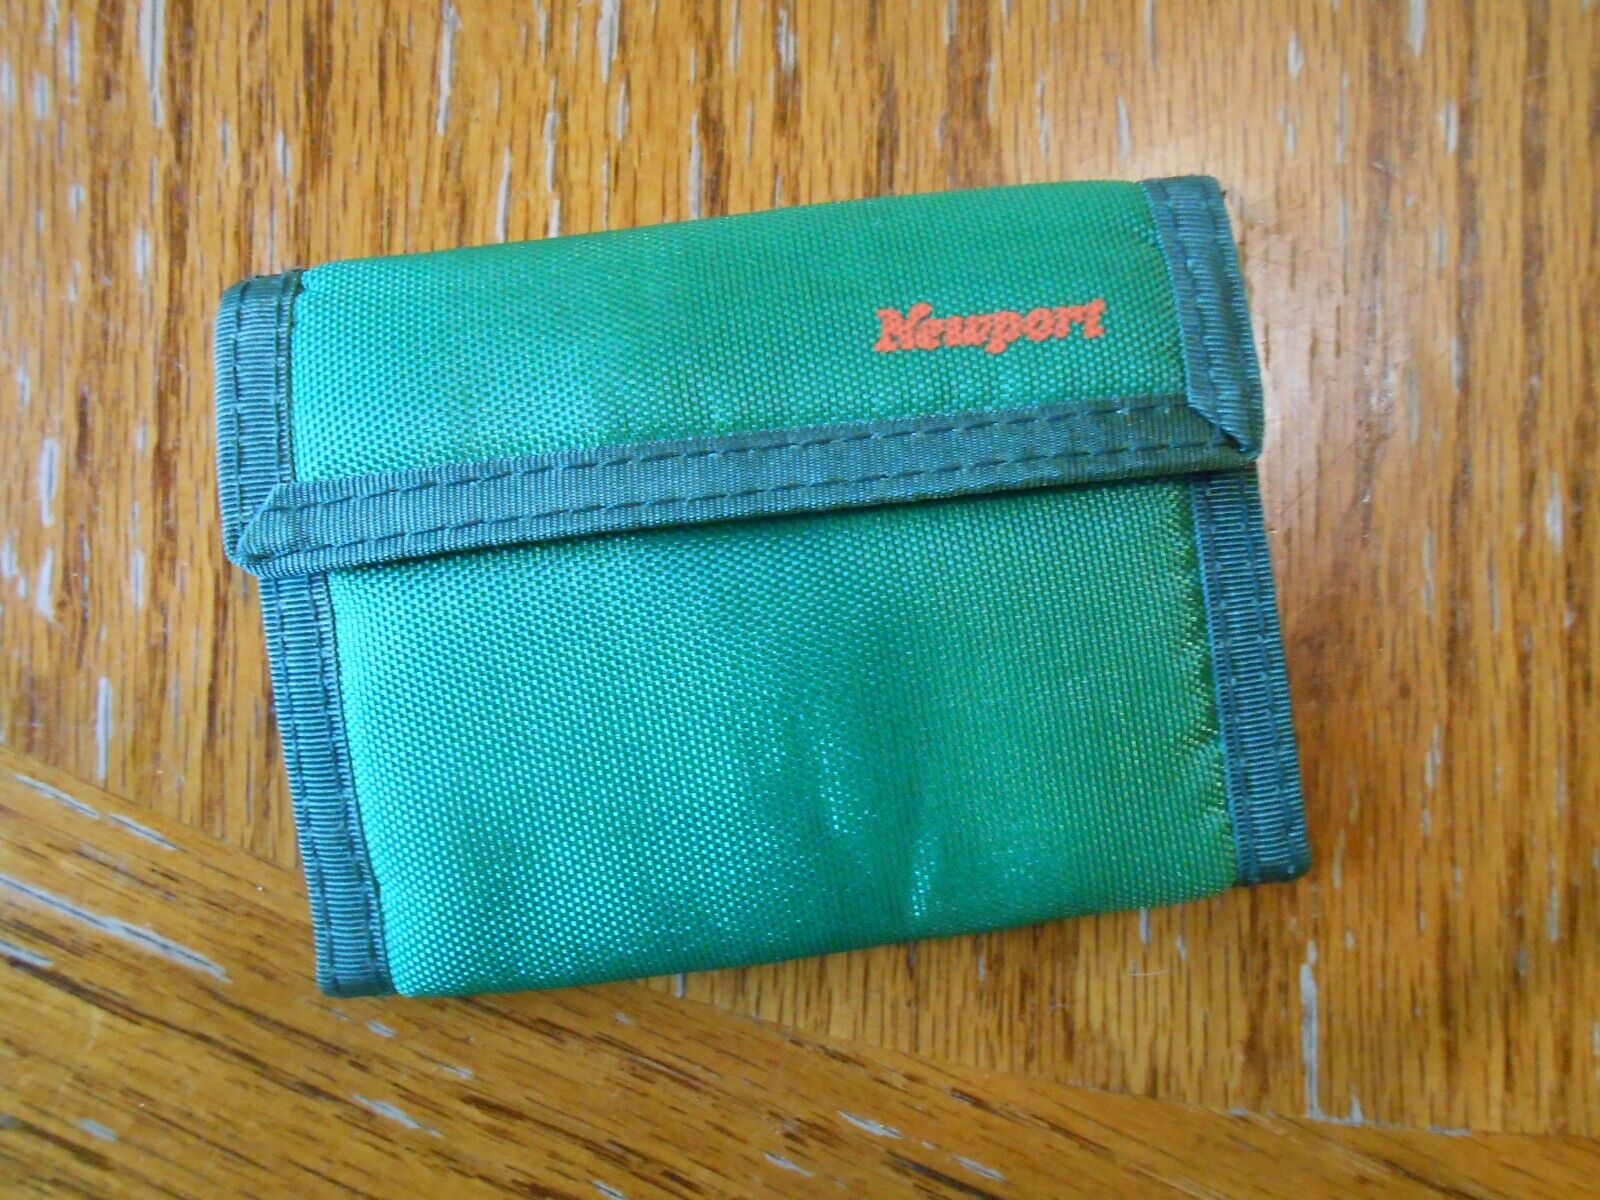 NEWPORT CIGARETTE Wallet Nylon Green Bifold - VGC